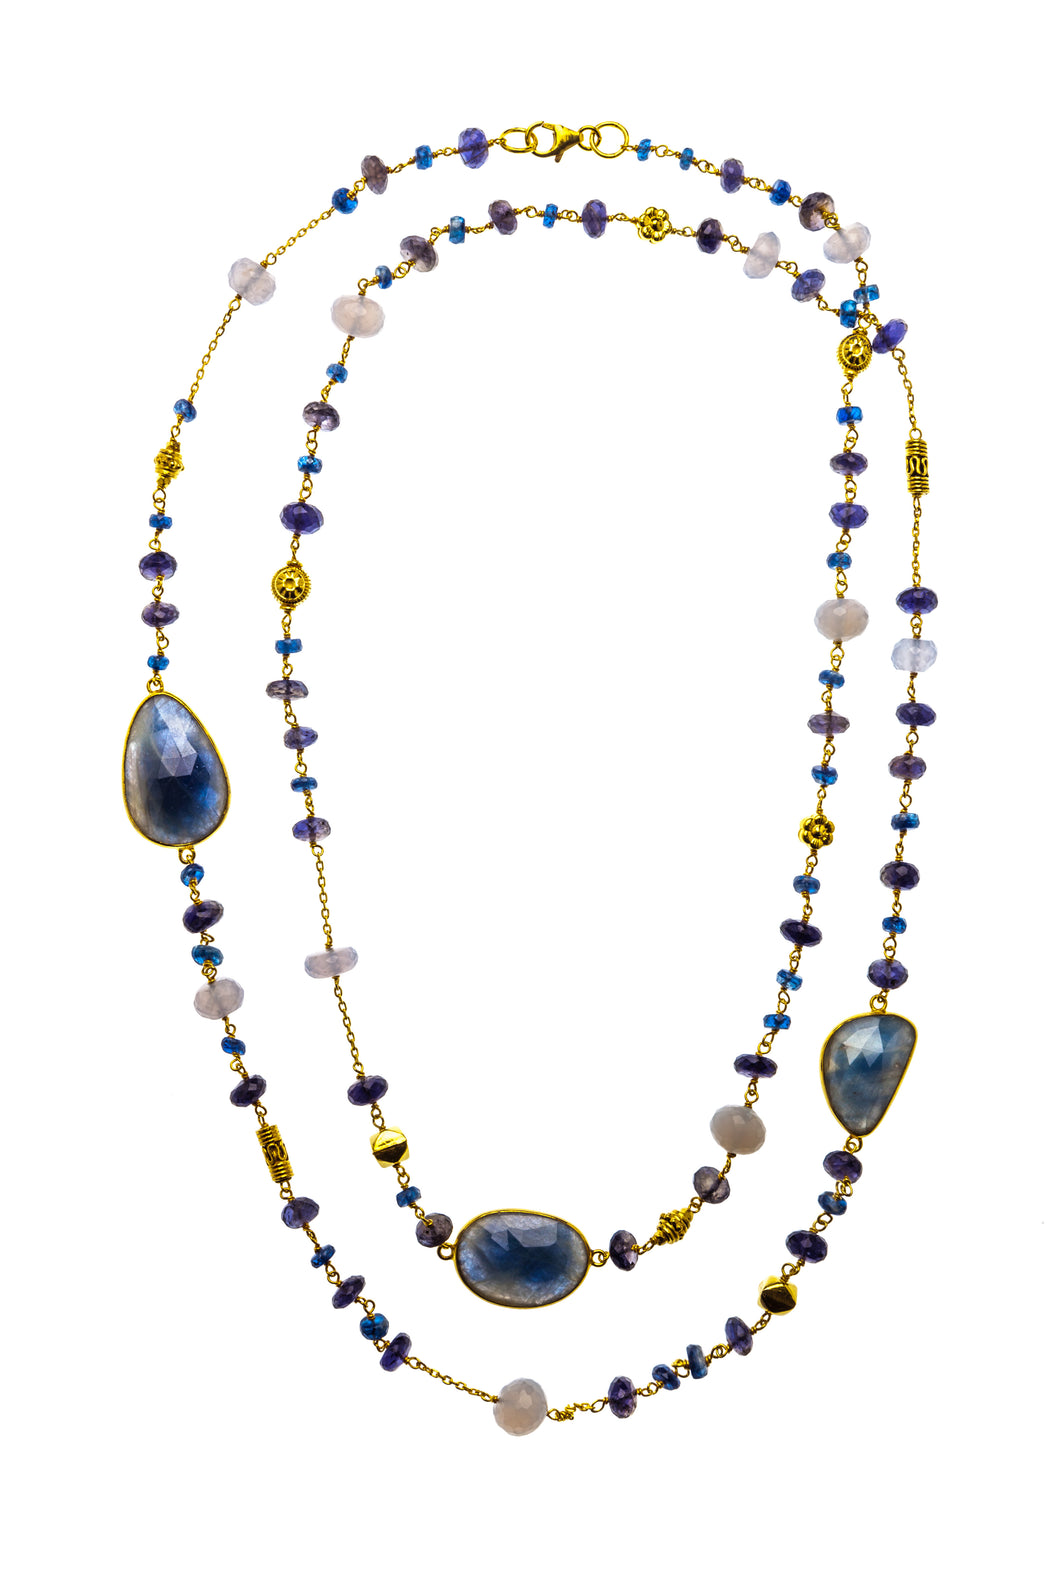 40-inch Gemstone Necklace with Brilliant Blue Sapphire Slices in 24kt gold vermeil N004-K